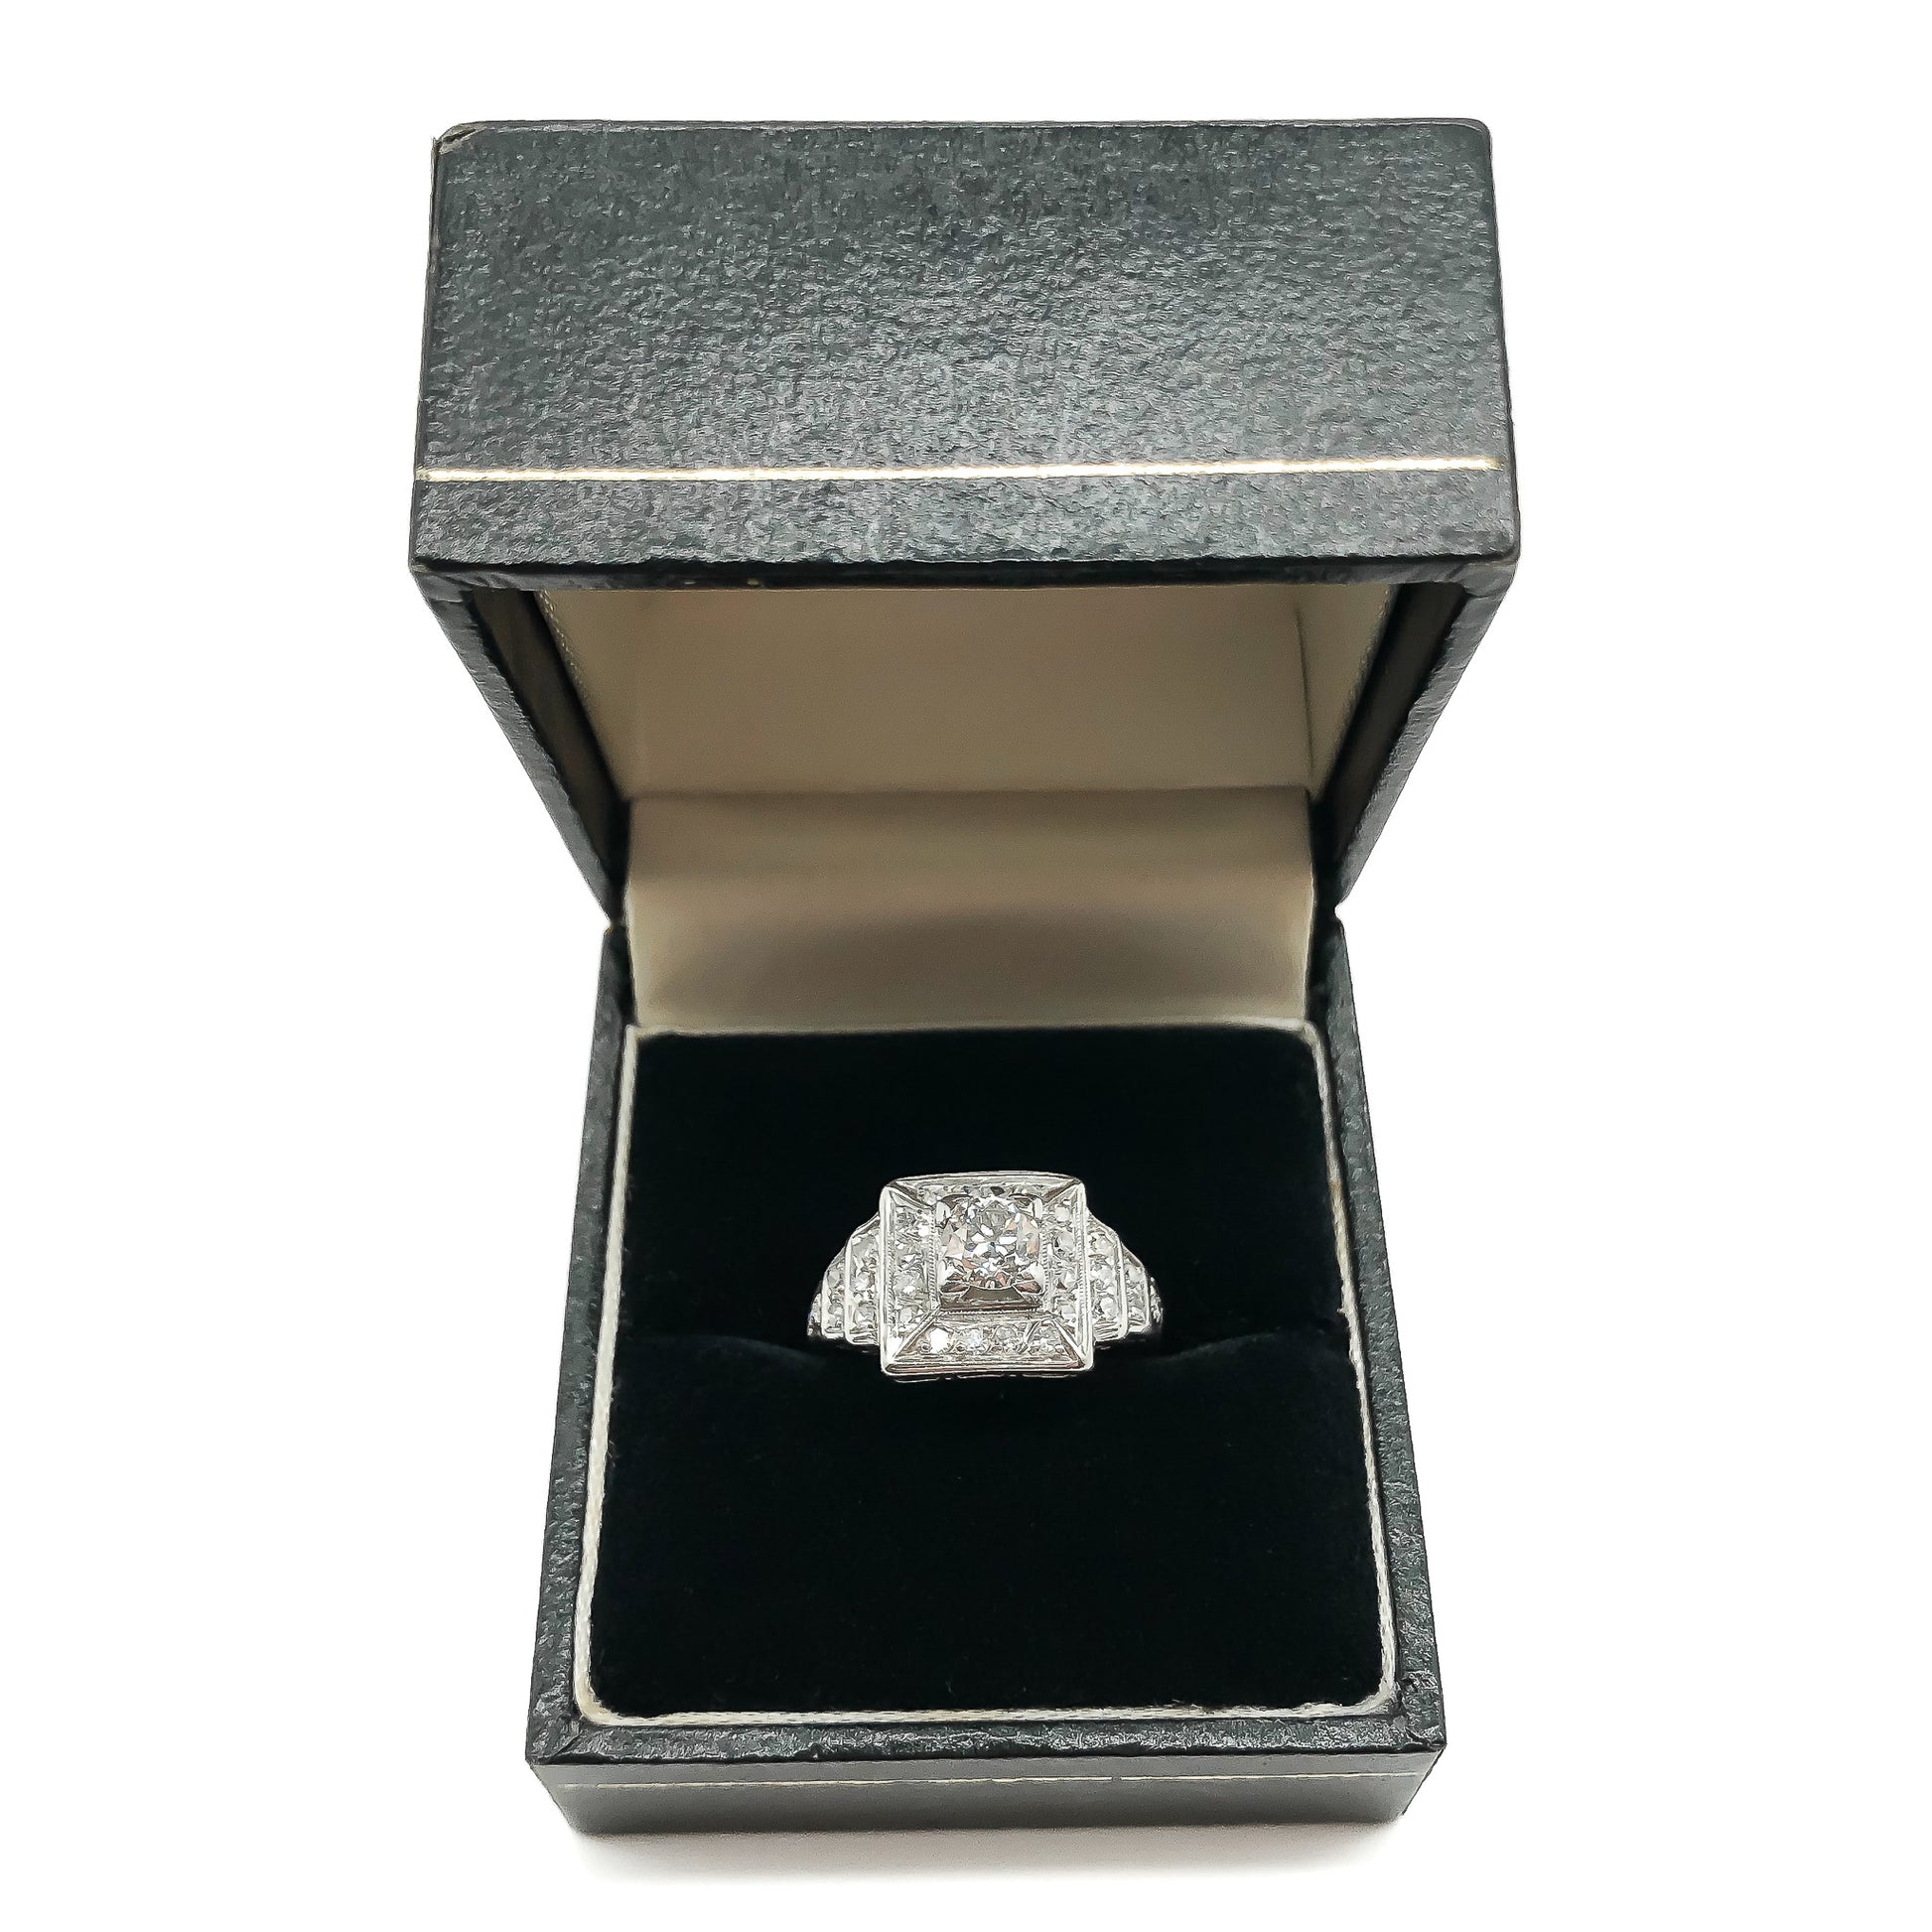 Stylish Art Deco platinum diamond ring set with a 0.50ct centre diamond, surrounded by twenty-eight smaller old-cut diamonds.